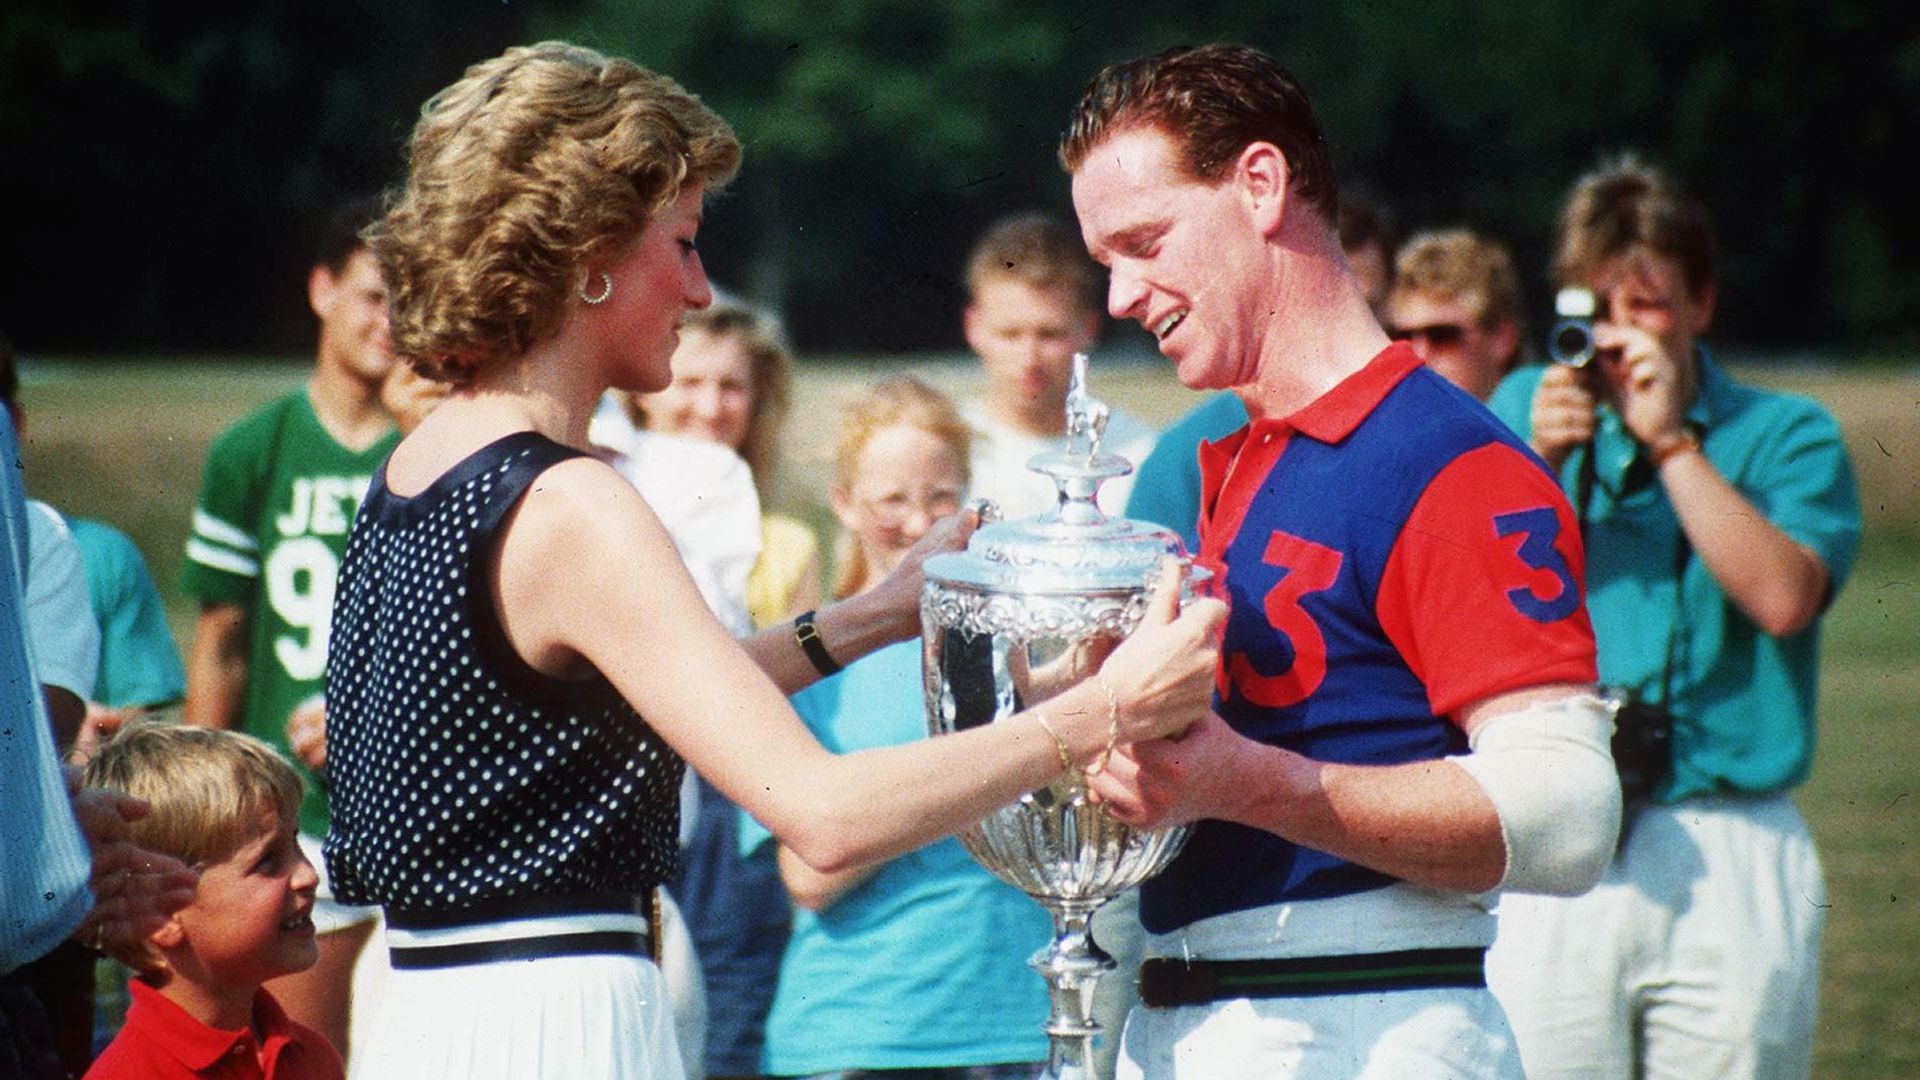 Princess Diana handing a trophy to James Hewitt